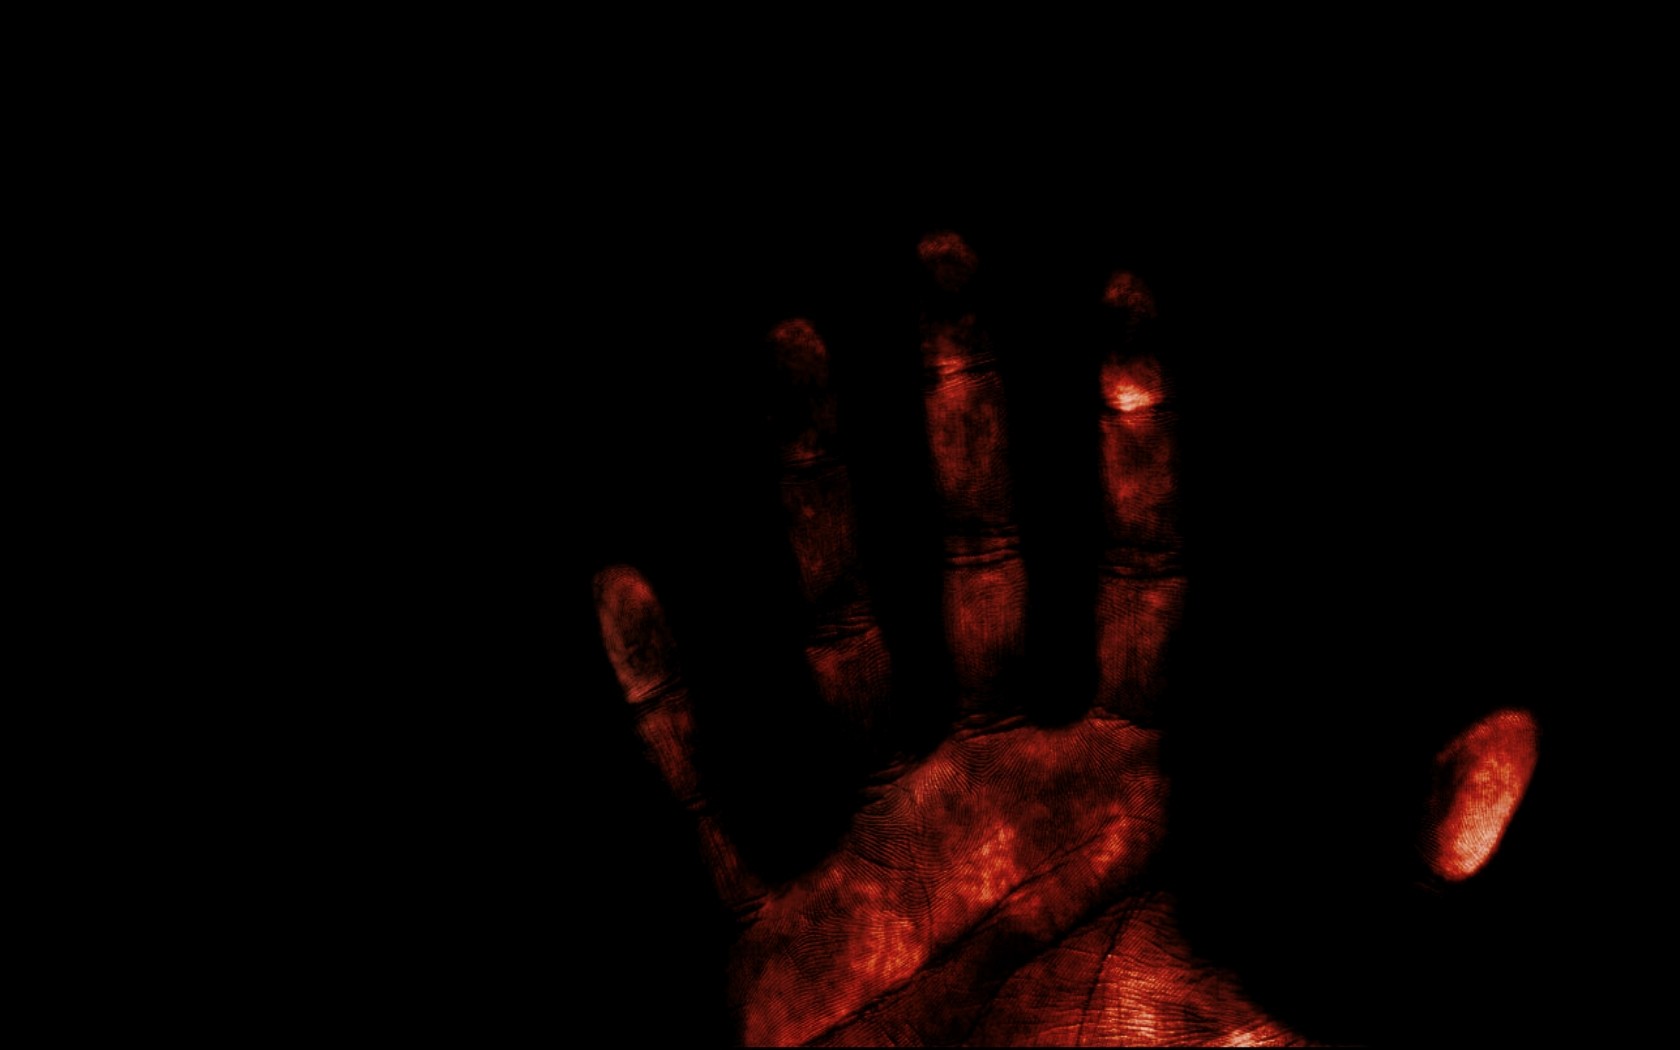 General 1680x1050 hands dark simple background black background spooky fingers red